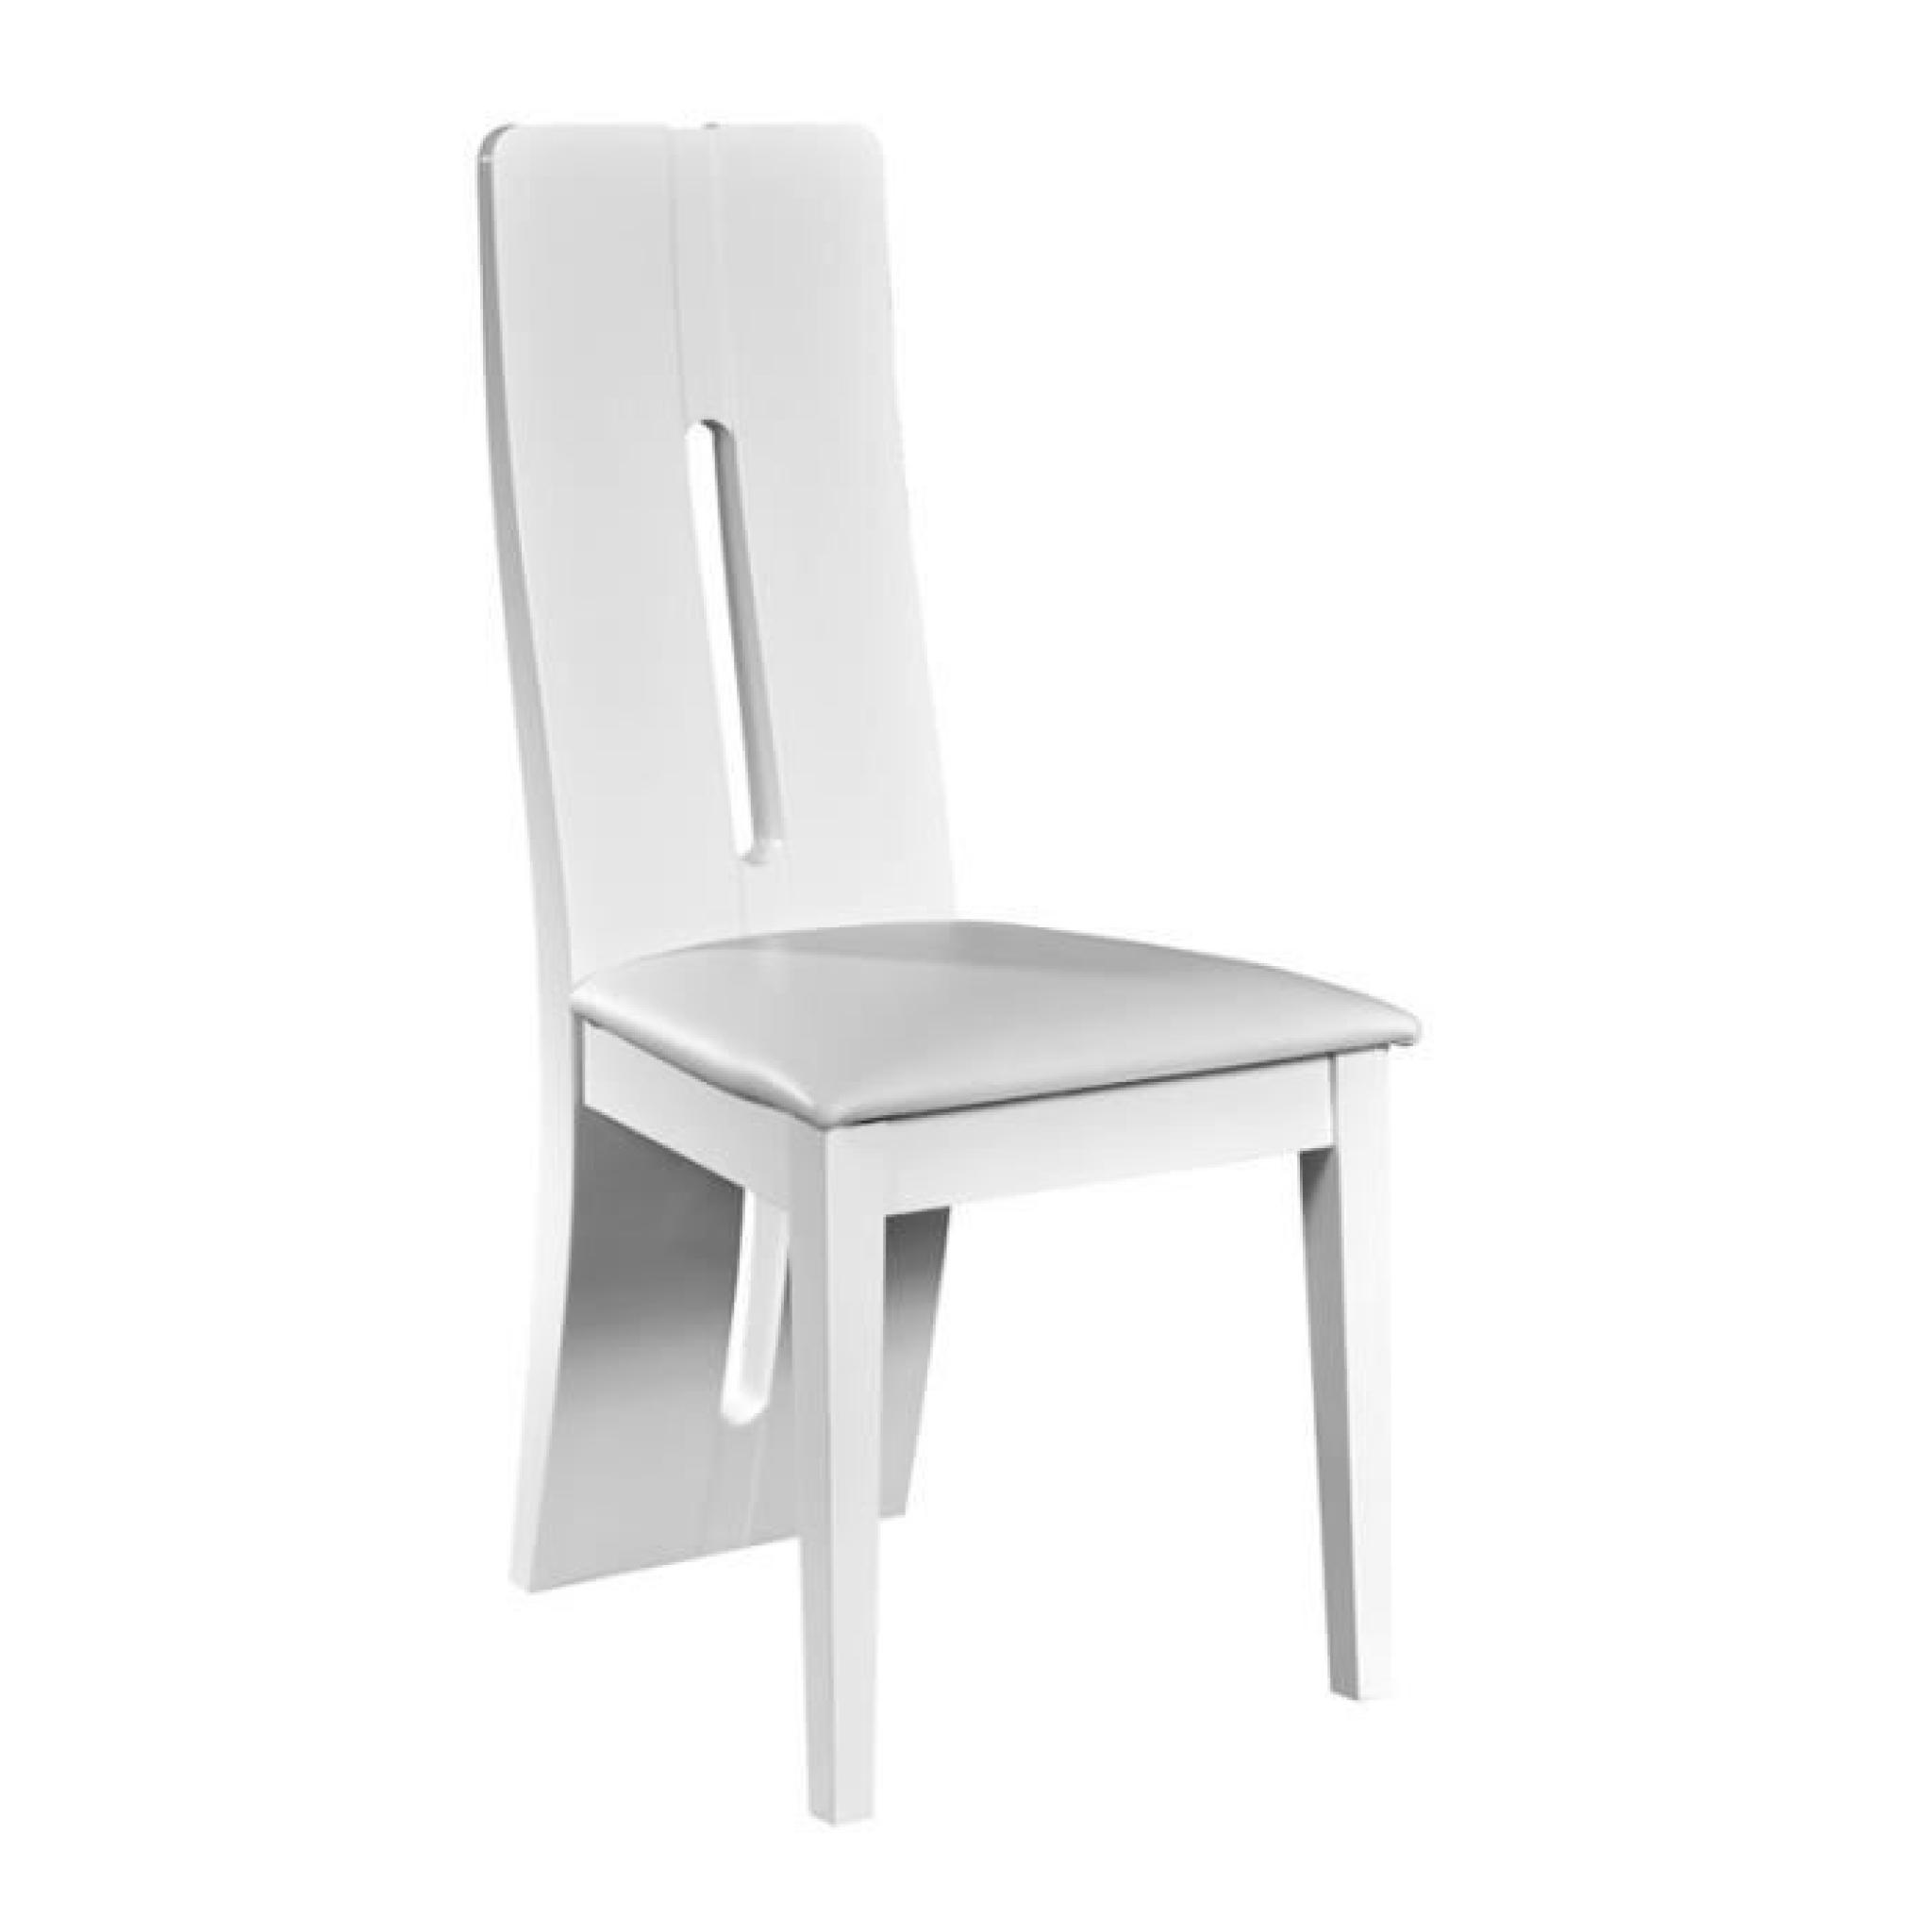 Duo de chaises PU Blanc - FILY pas cher